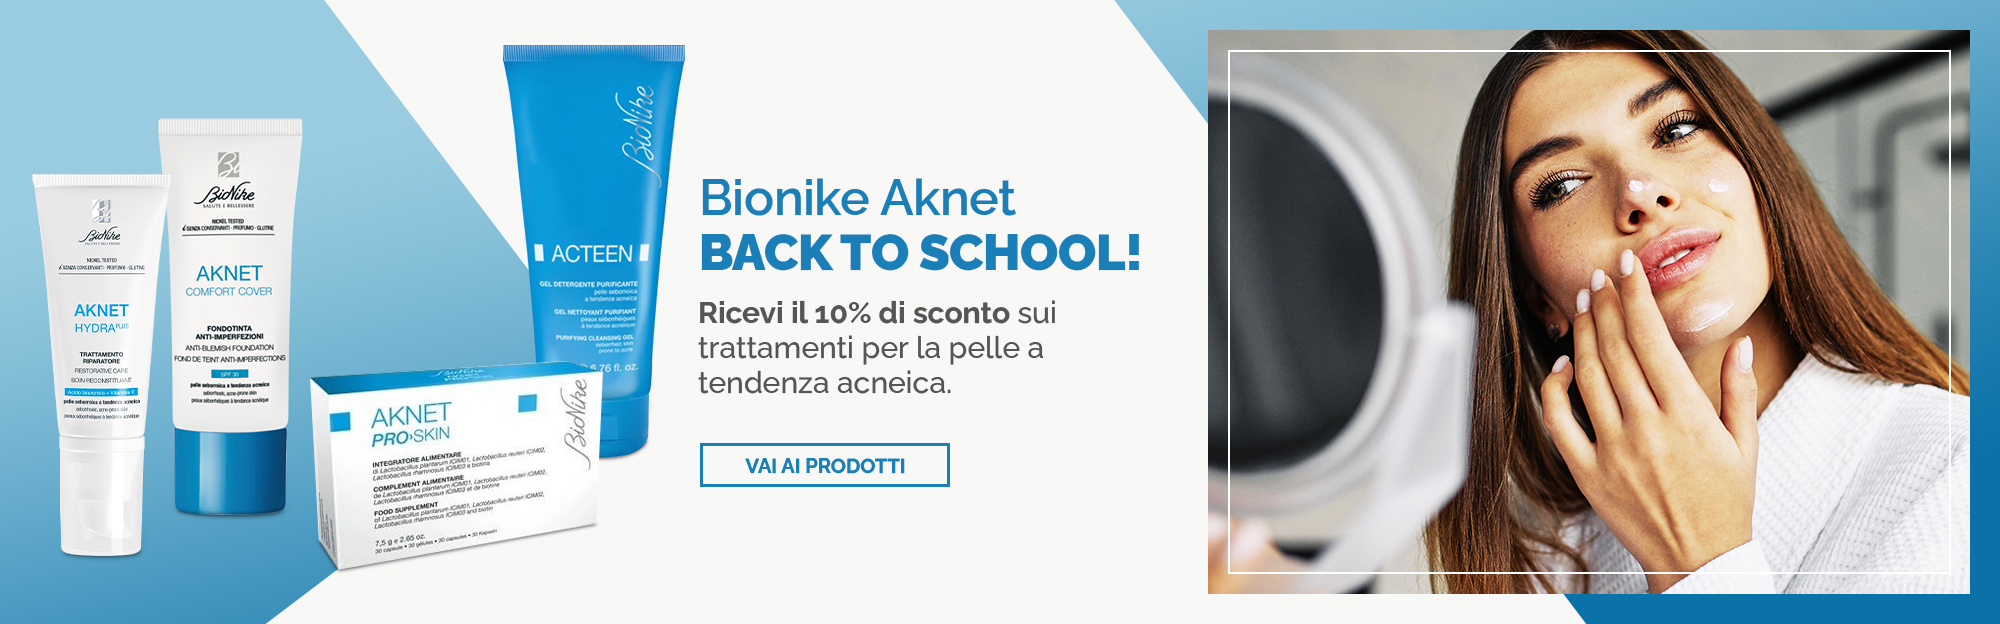 0000000000FarmaciaProcaccini_slideD_bionike-aknet-back-to-school